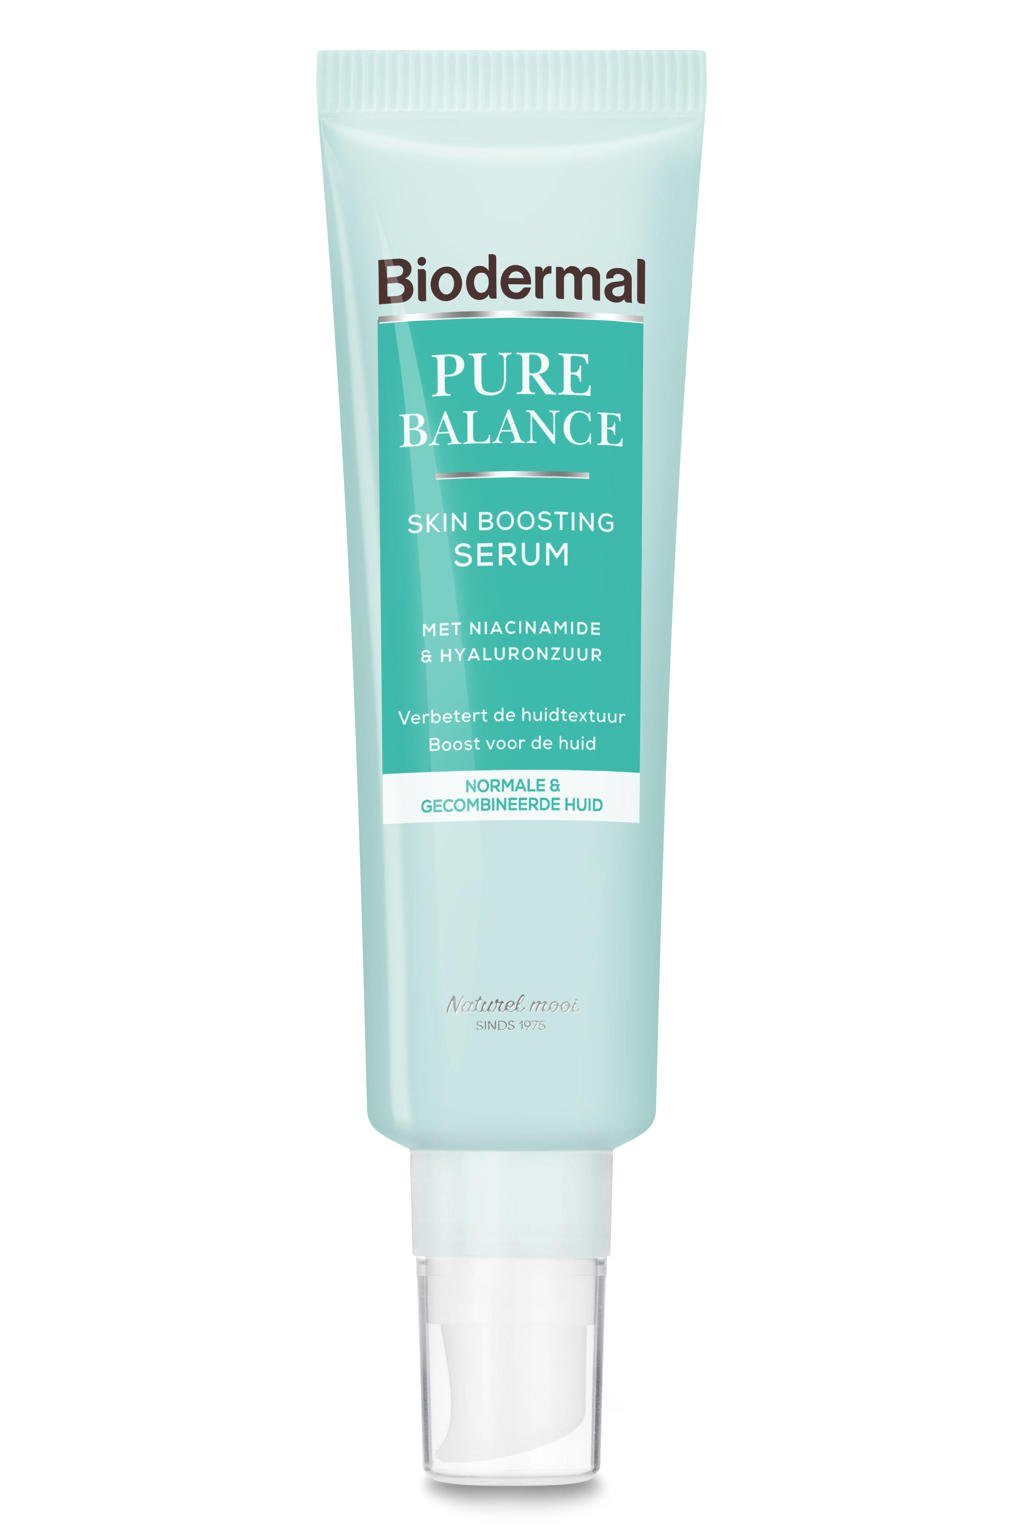 Biodermal Pure Balance Skin Boosting Serum met hyaluronzuur